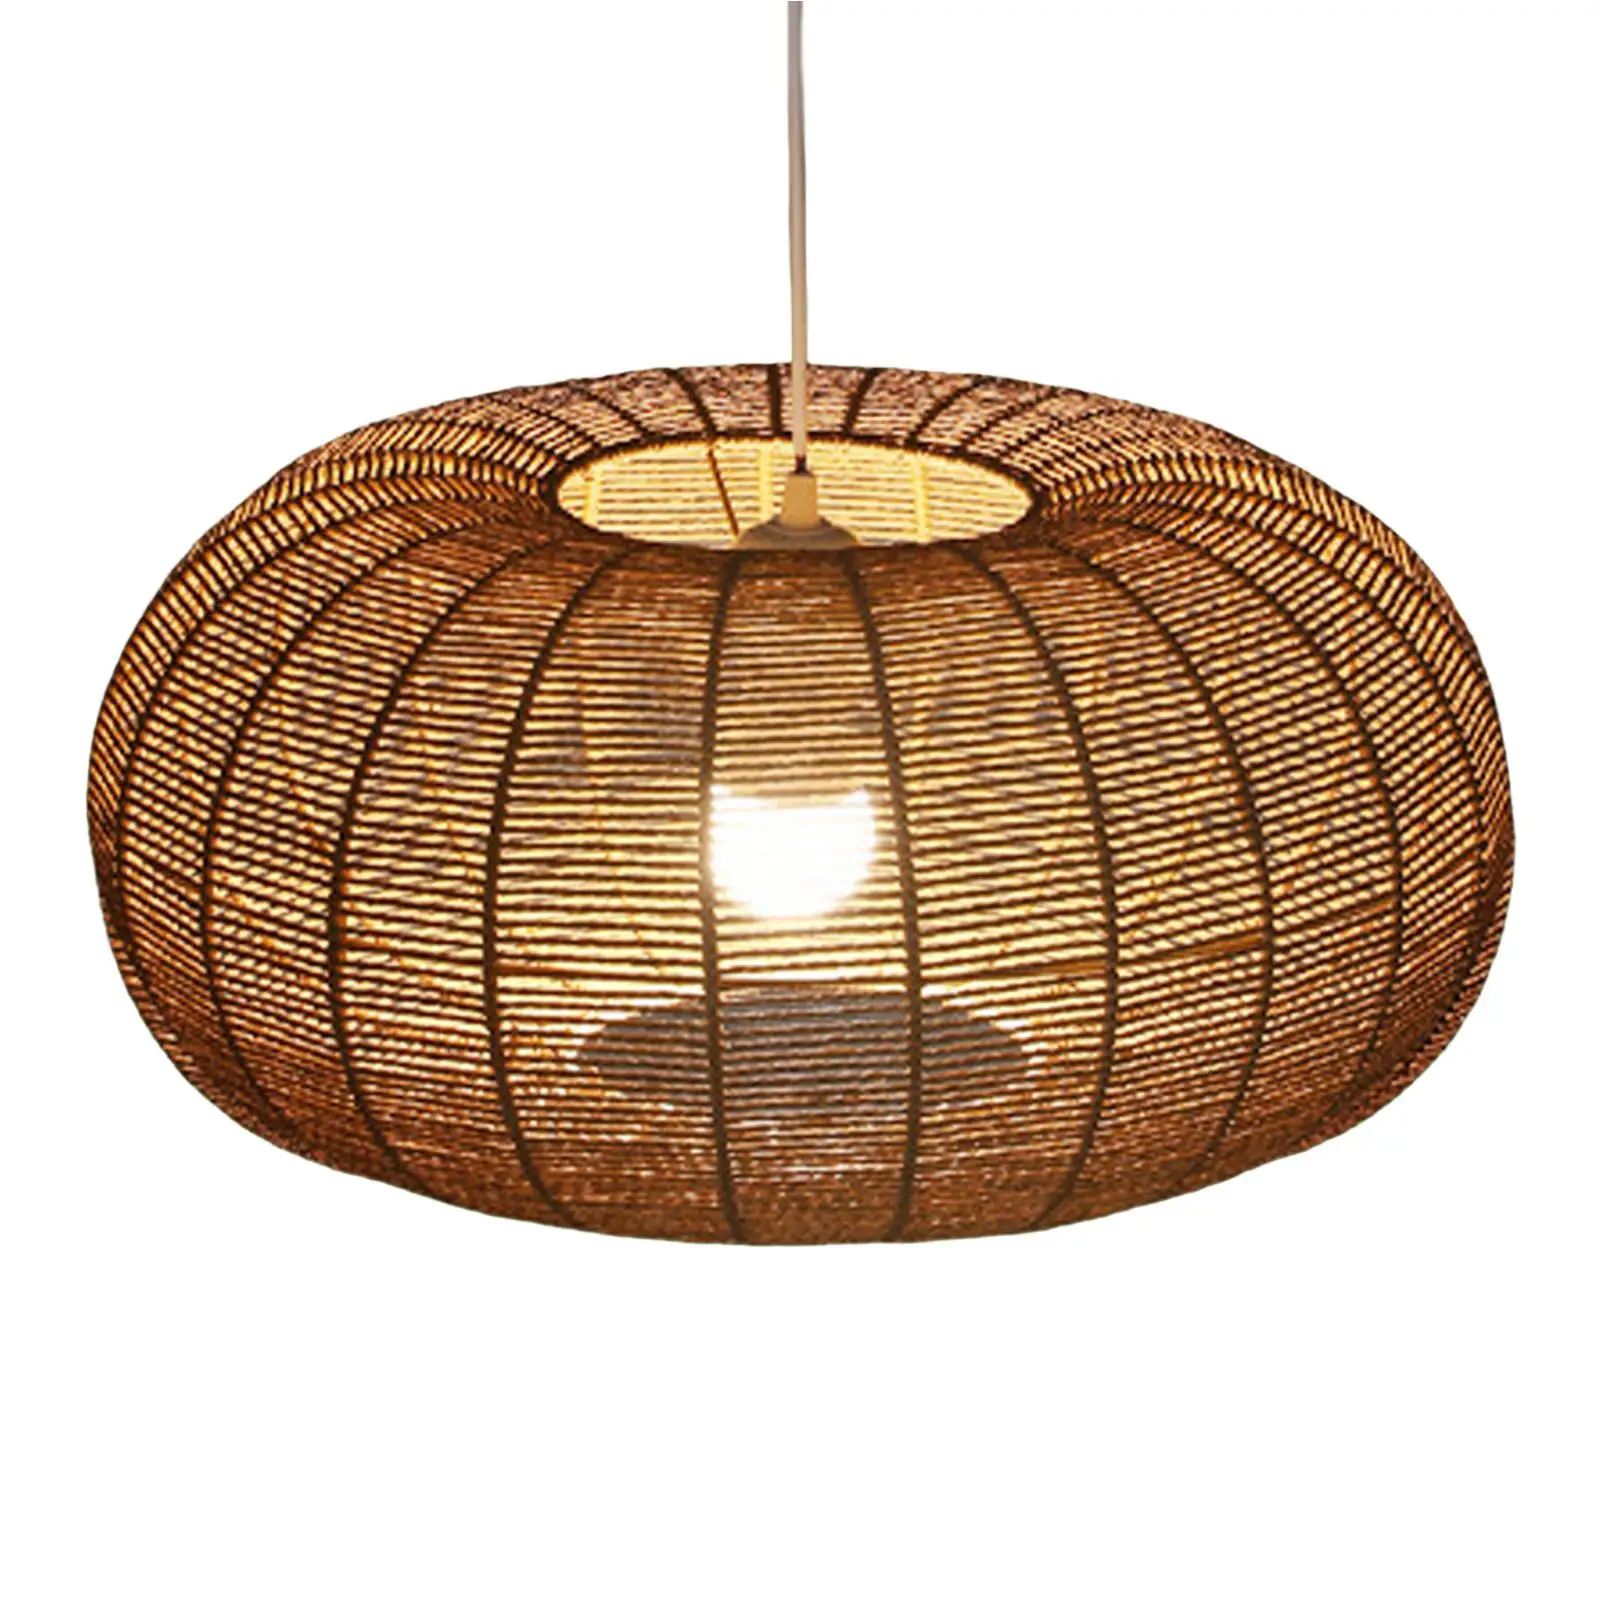 Boho Pendant Lamp Shade Ceiling Light Shade Decor Rope Kitchen Dining Room